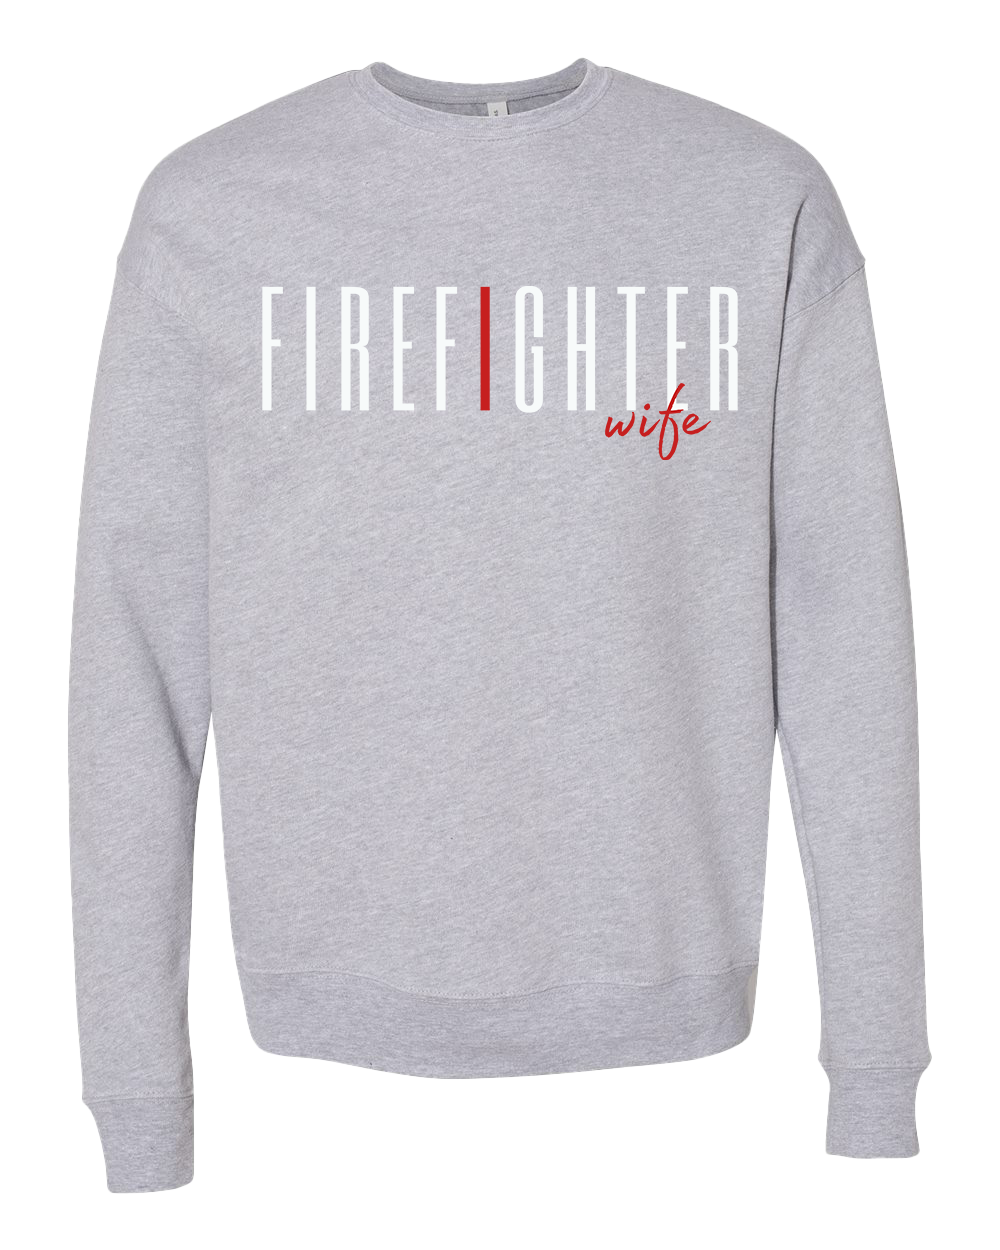 Firefighter Wife Crew Sweatshirt - Athletic Grey